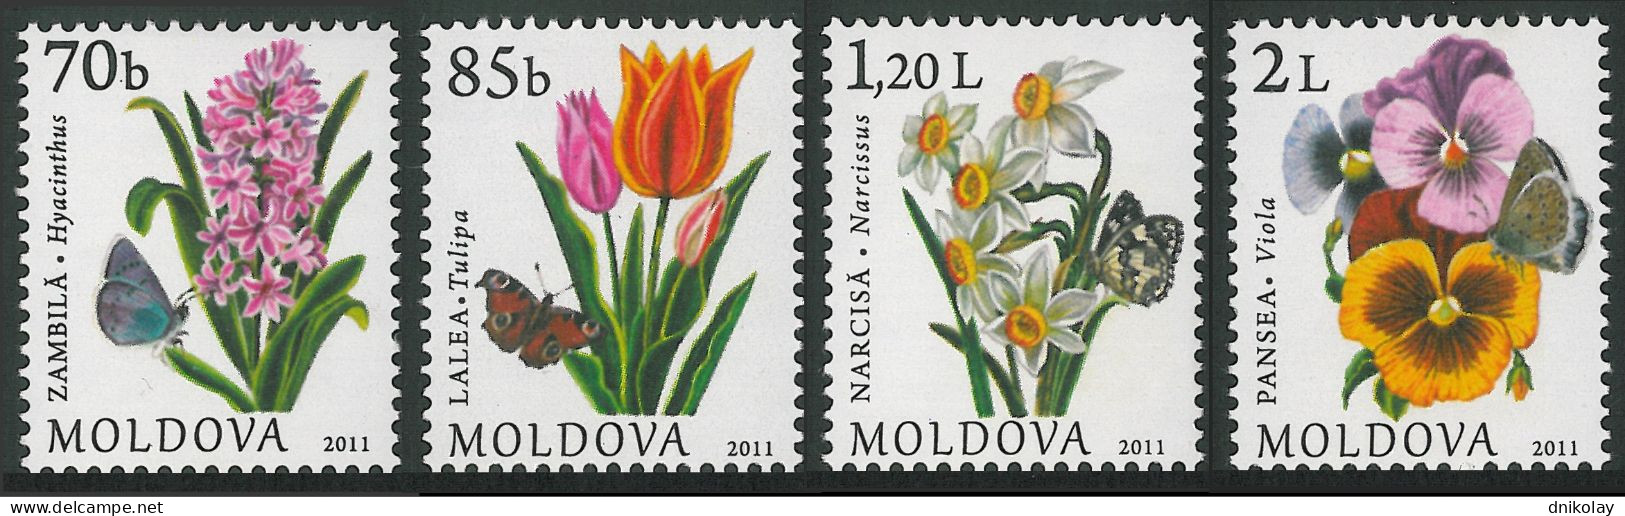 2011 757 Moldova The 575th Anniversary Of Kishinev MNH - Moldavia